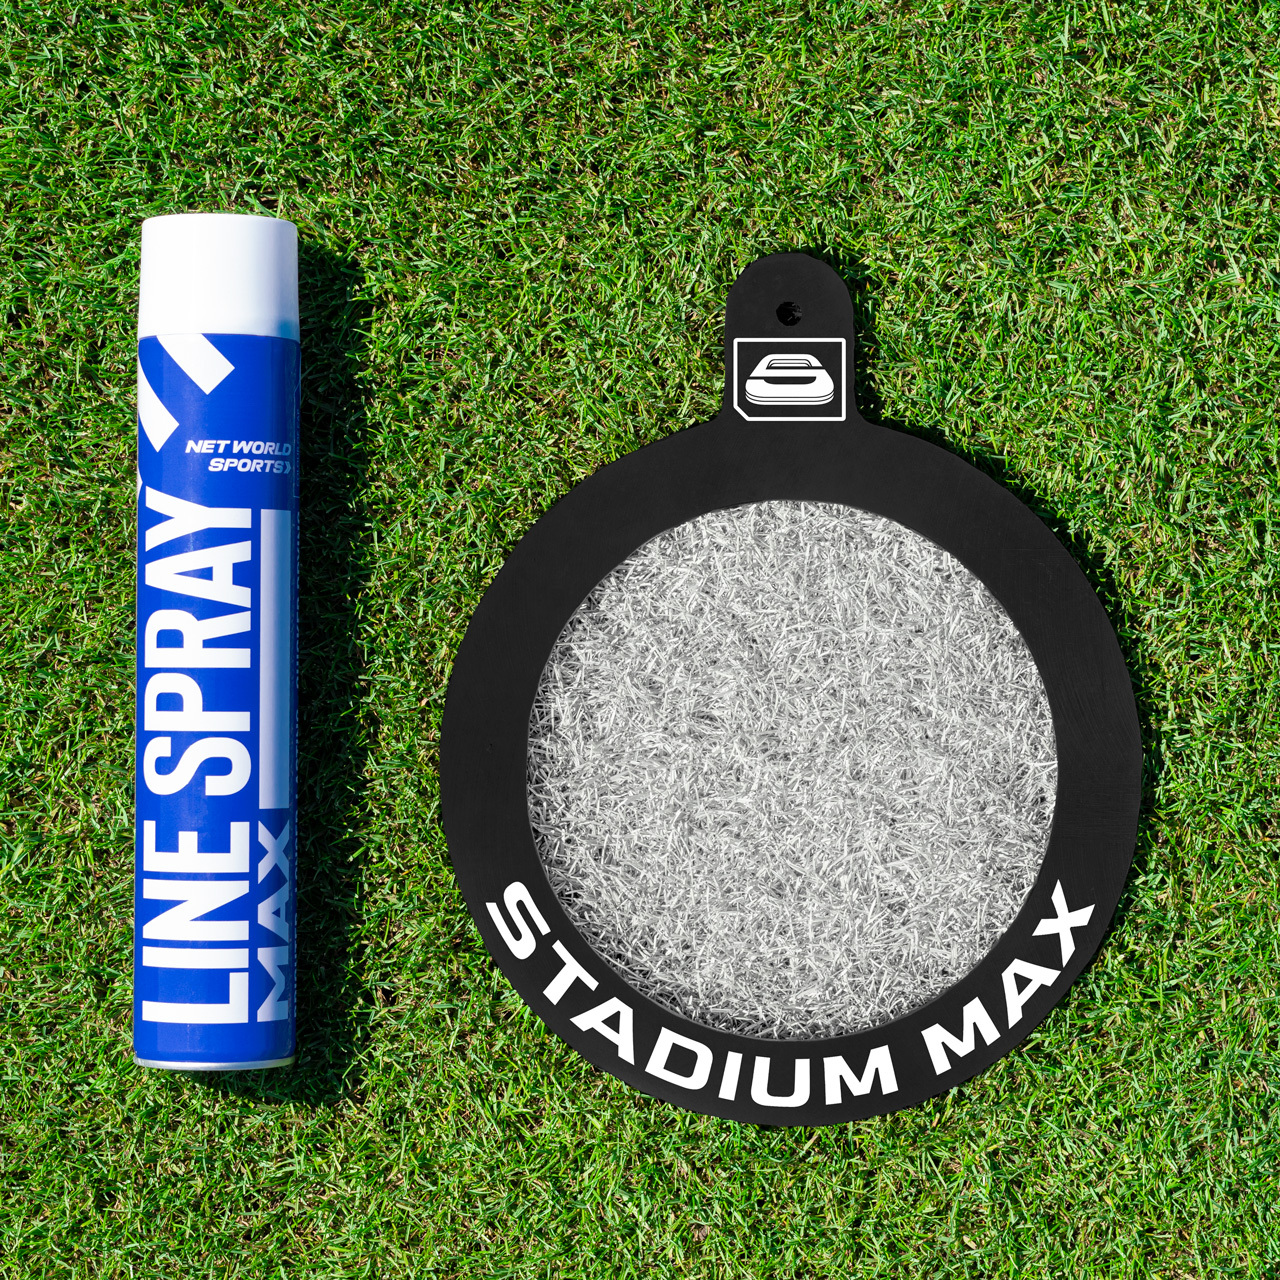 StadiumMax Penalty Spot Marker